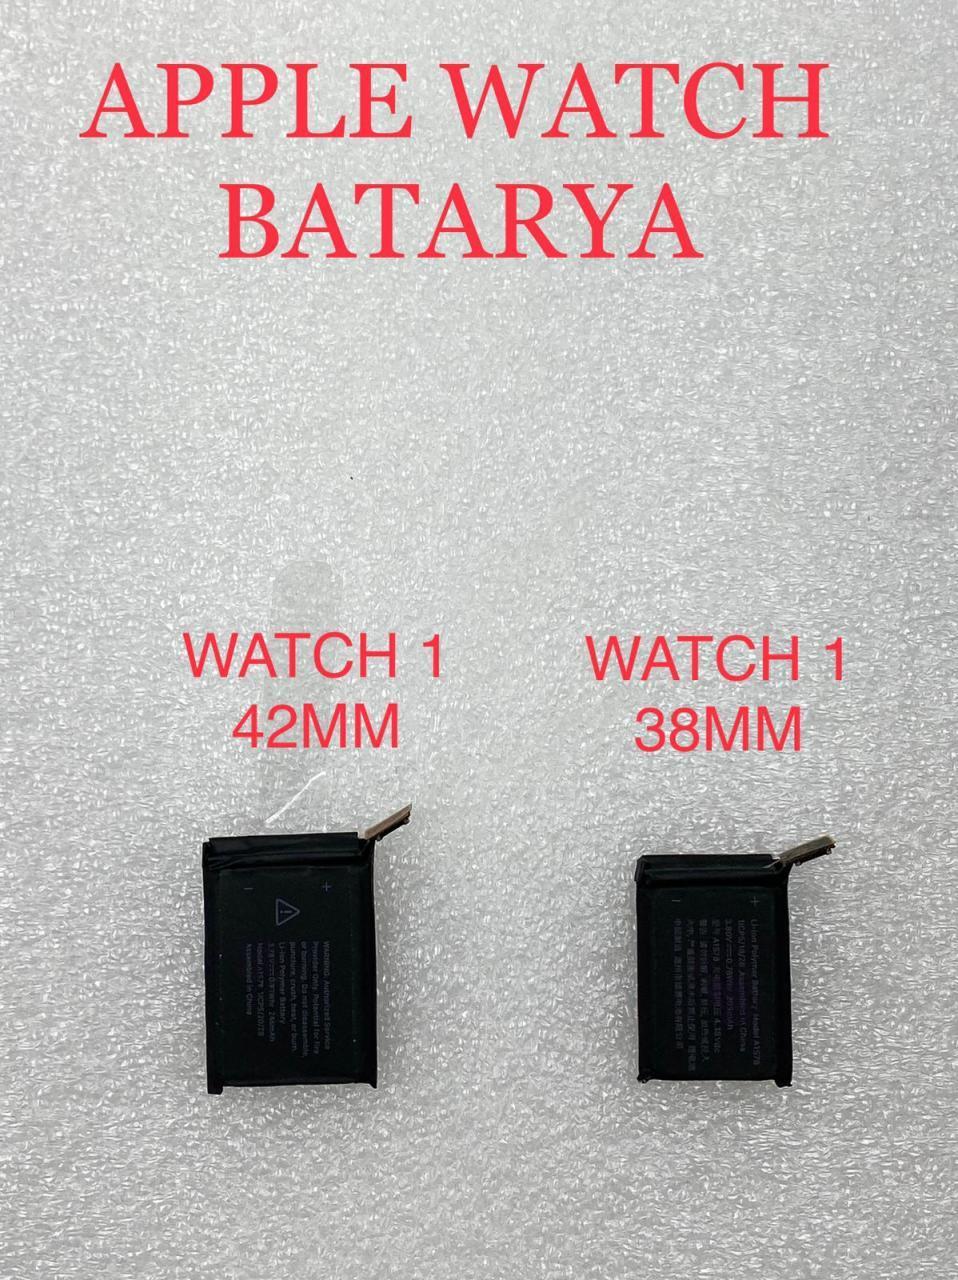 Watch S5 44Mm Batarya